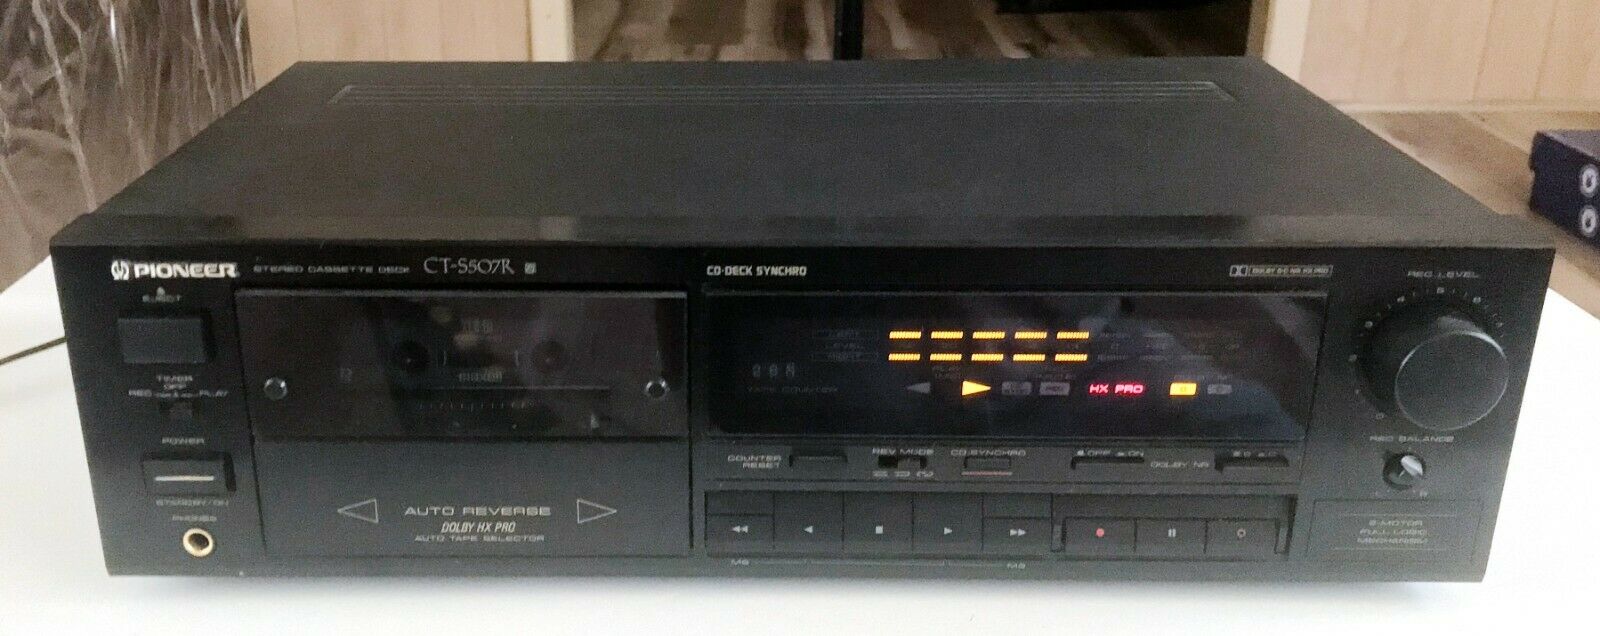 Vintage 1980s Pioneer Stereo Cassette Deck - Model Ct-s507r - Black